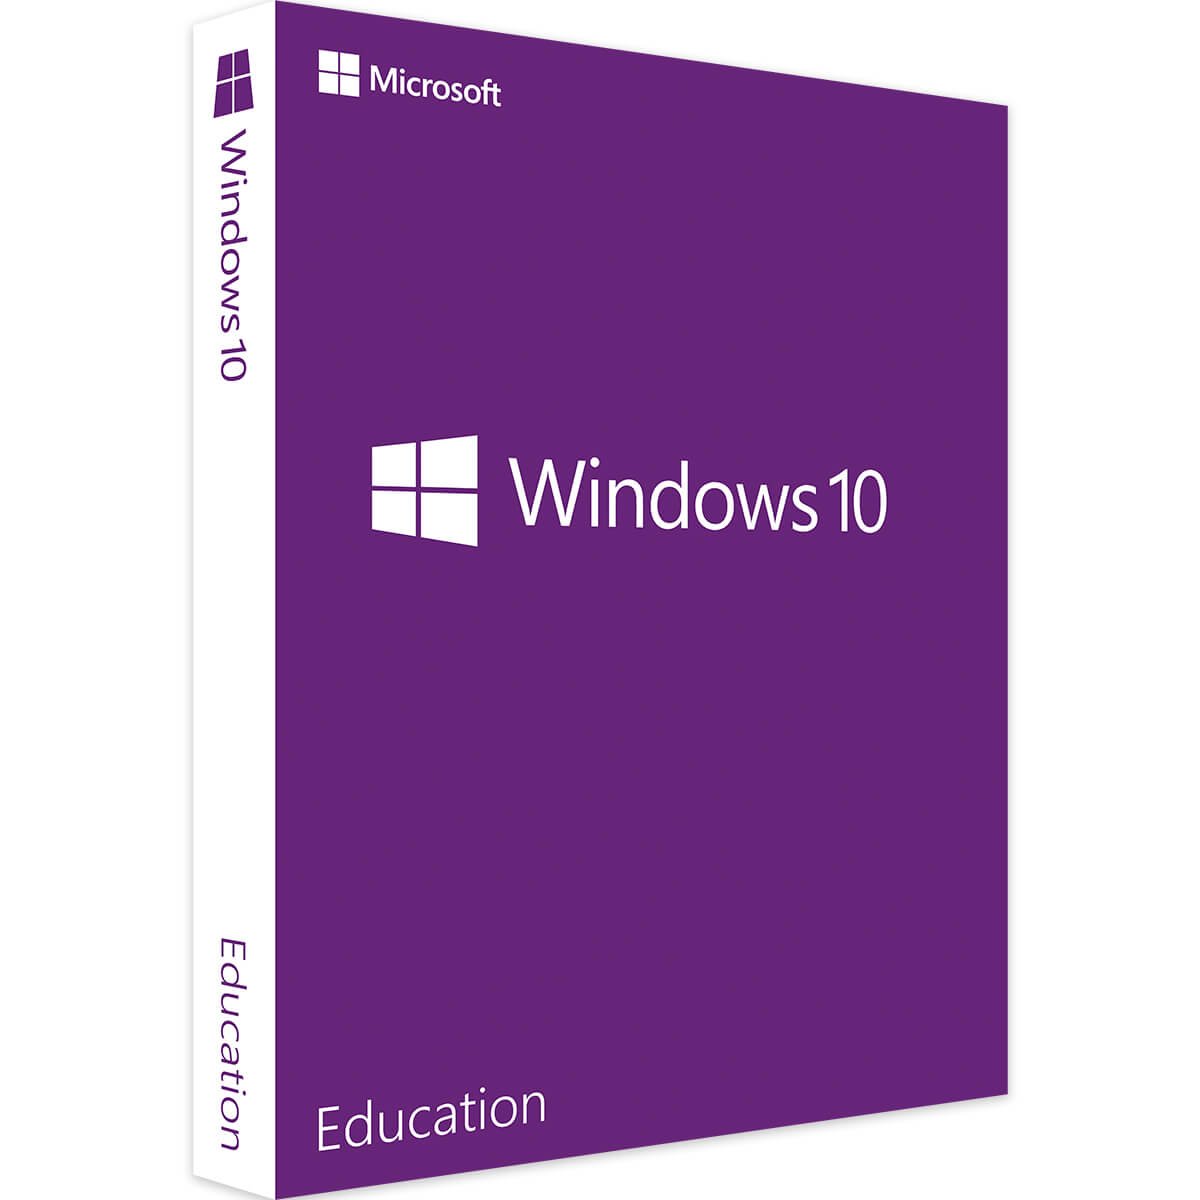 Windows 10 Education Key